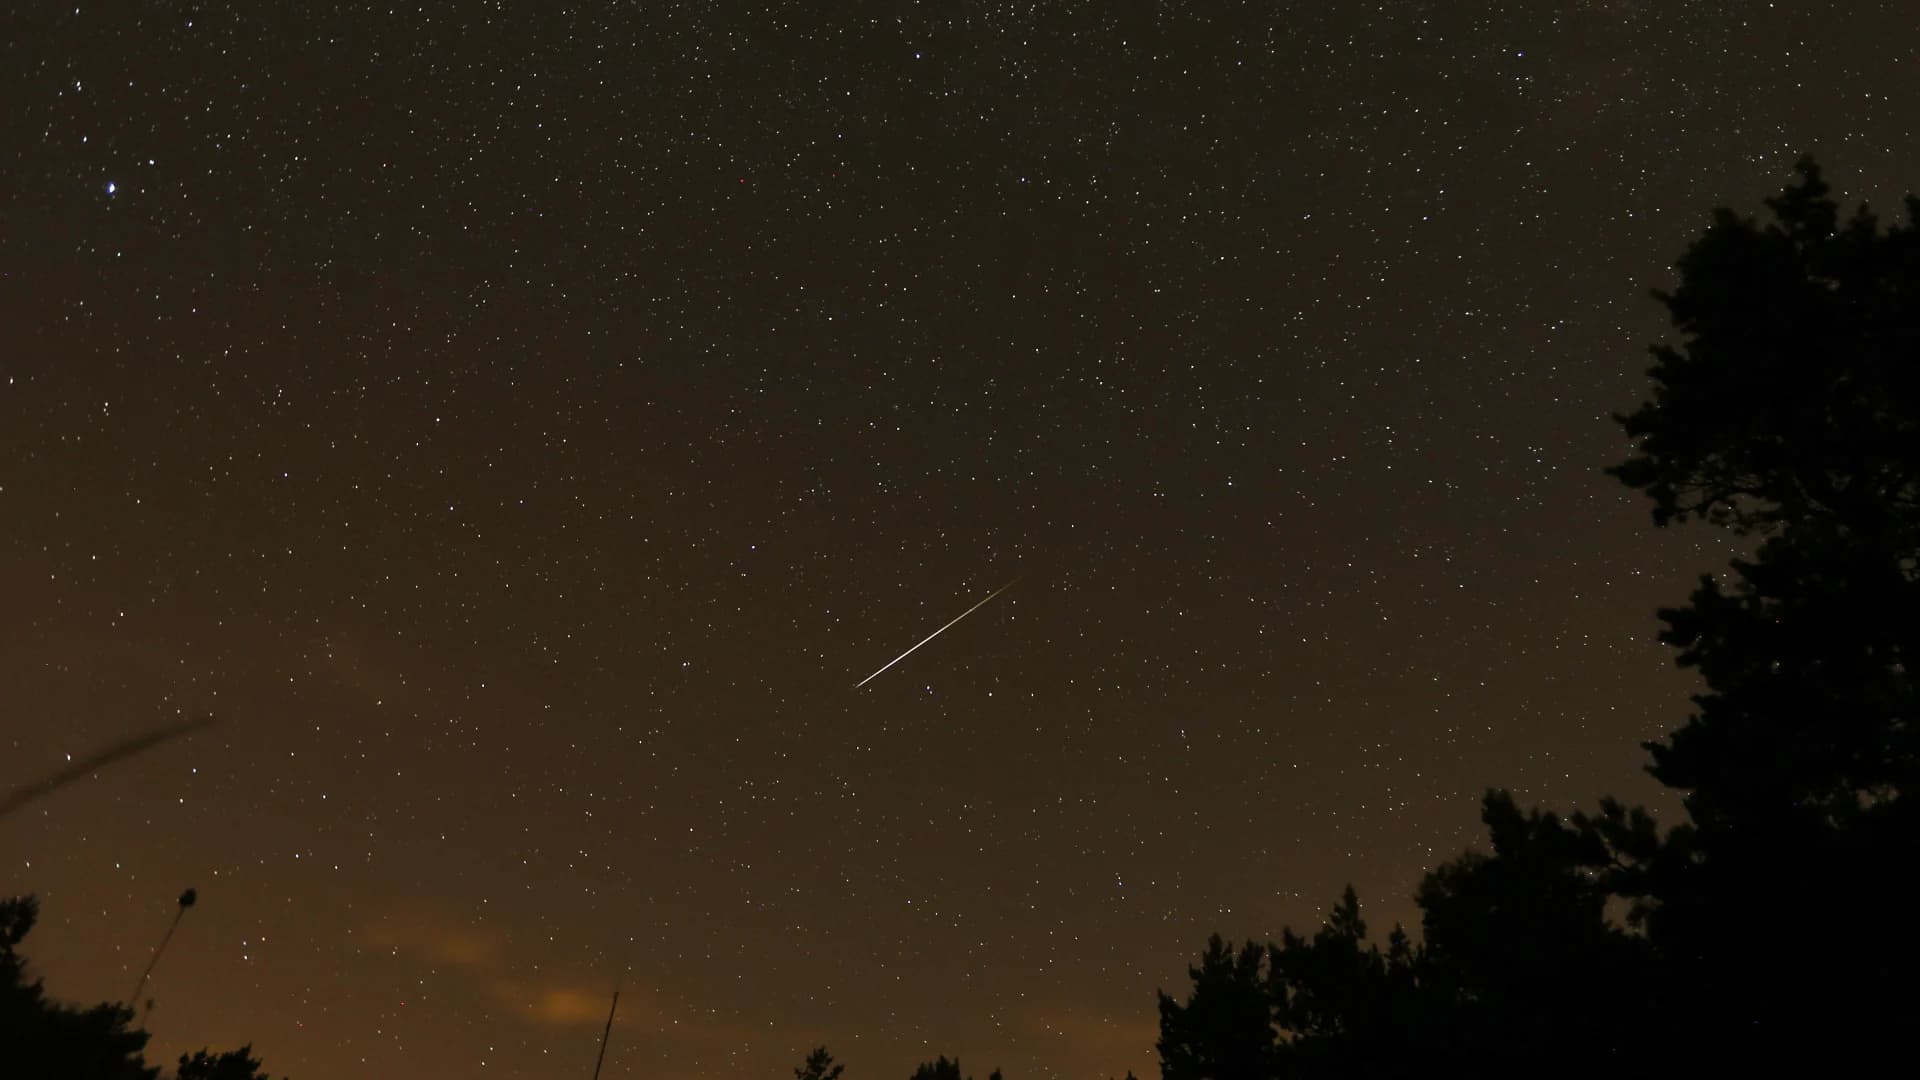 Eta Aquarid meteor shower peaks this week! Here's what you need to know